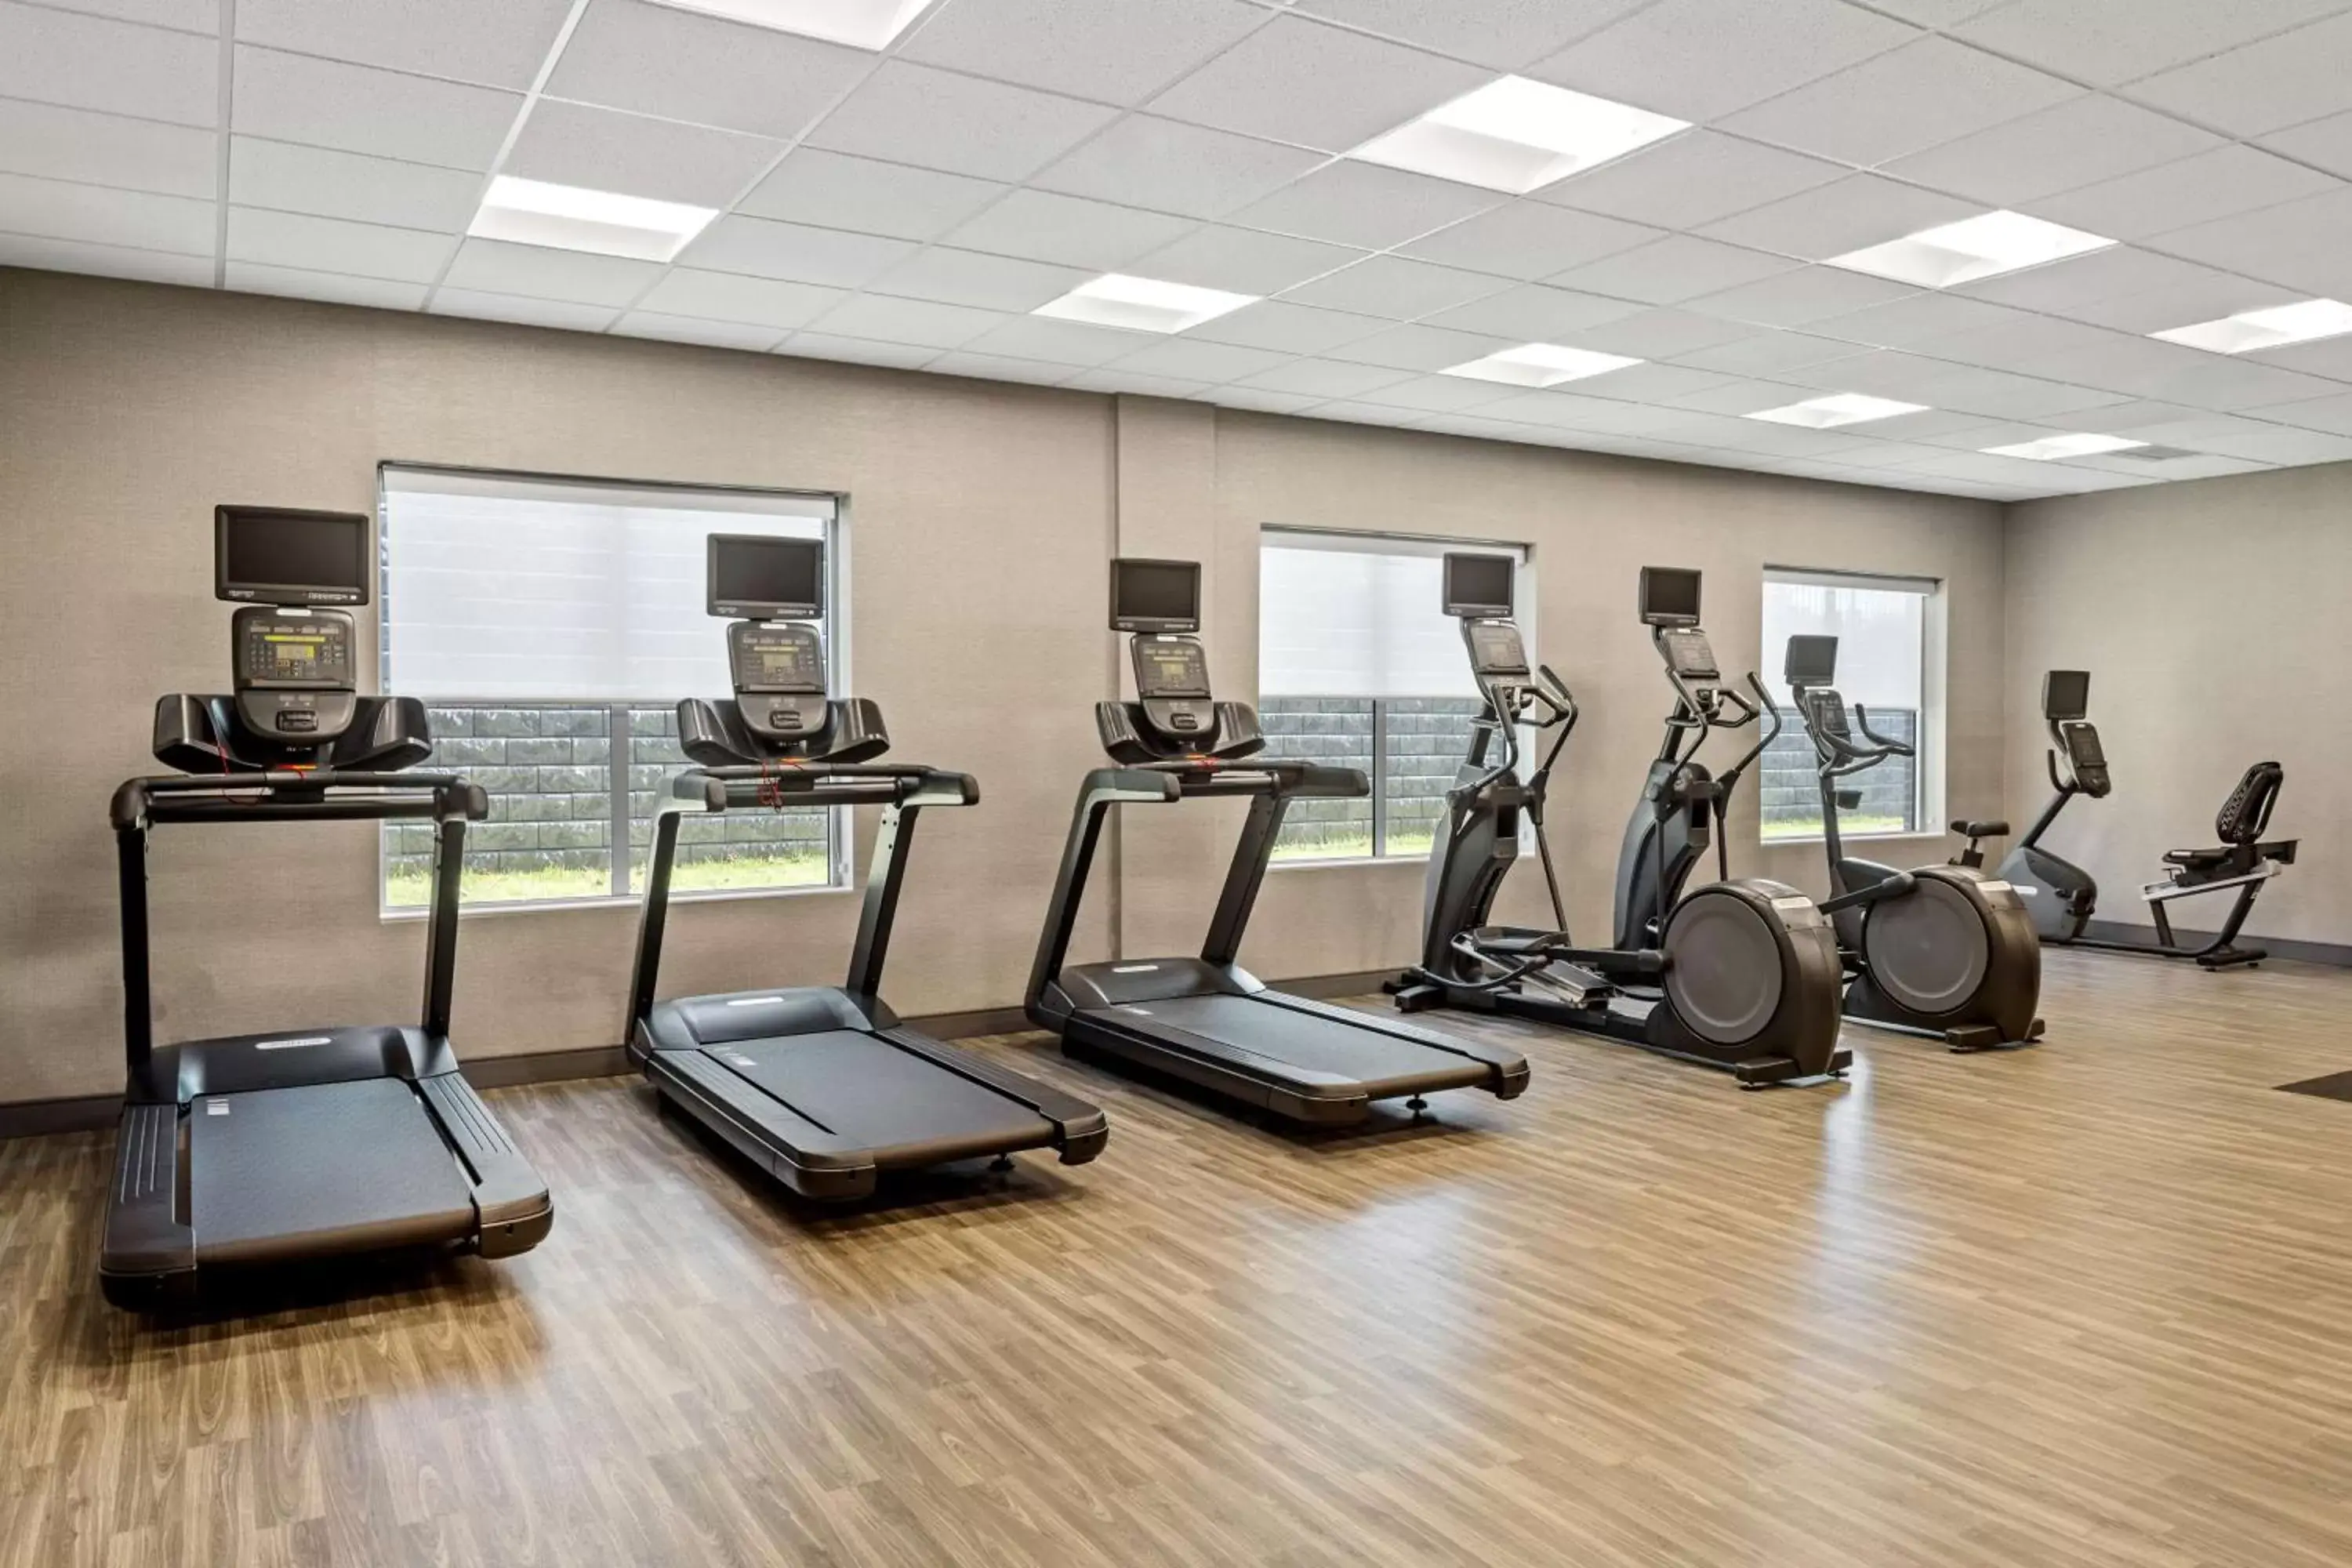 Fitness centre/facilities, Fitness Center/Facilities in Hampton Inn & Suites Cincinnati West, Oh